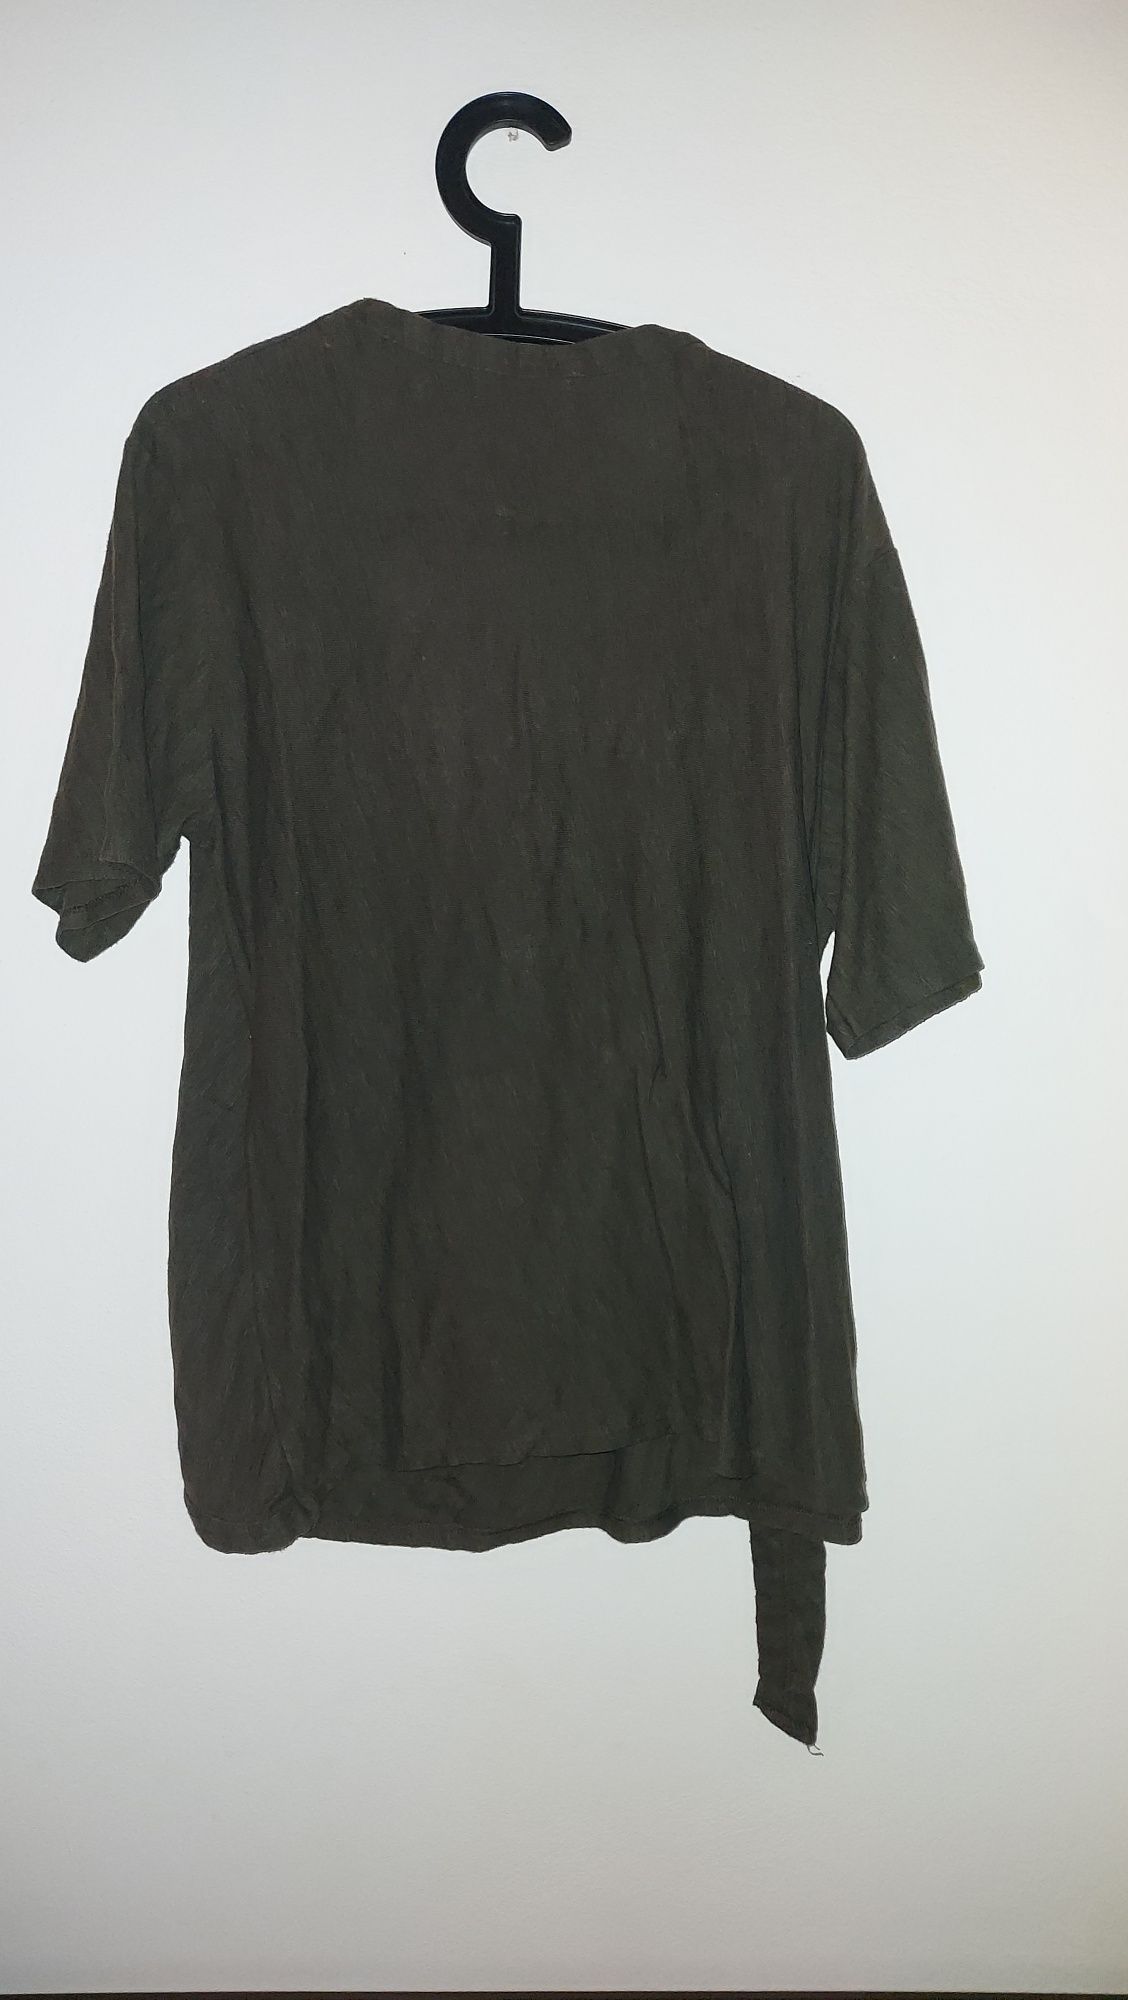 2 camisolas tamanho L - uma da Zara e t-shirt manga cava Bershka